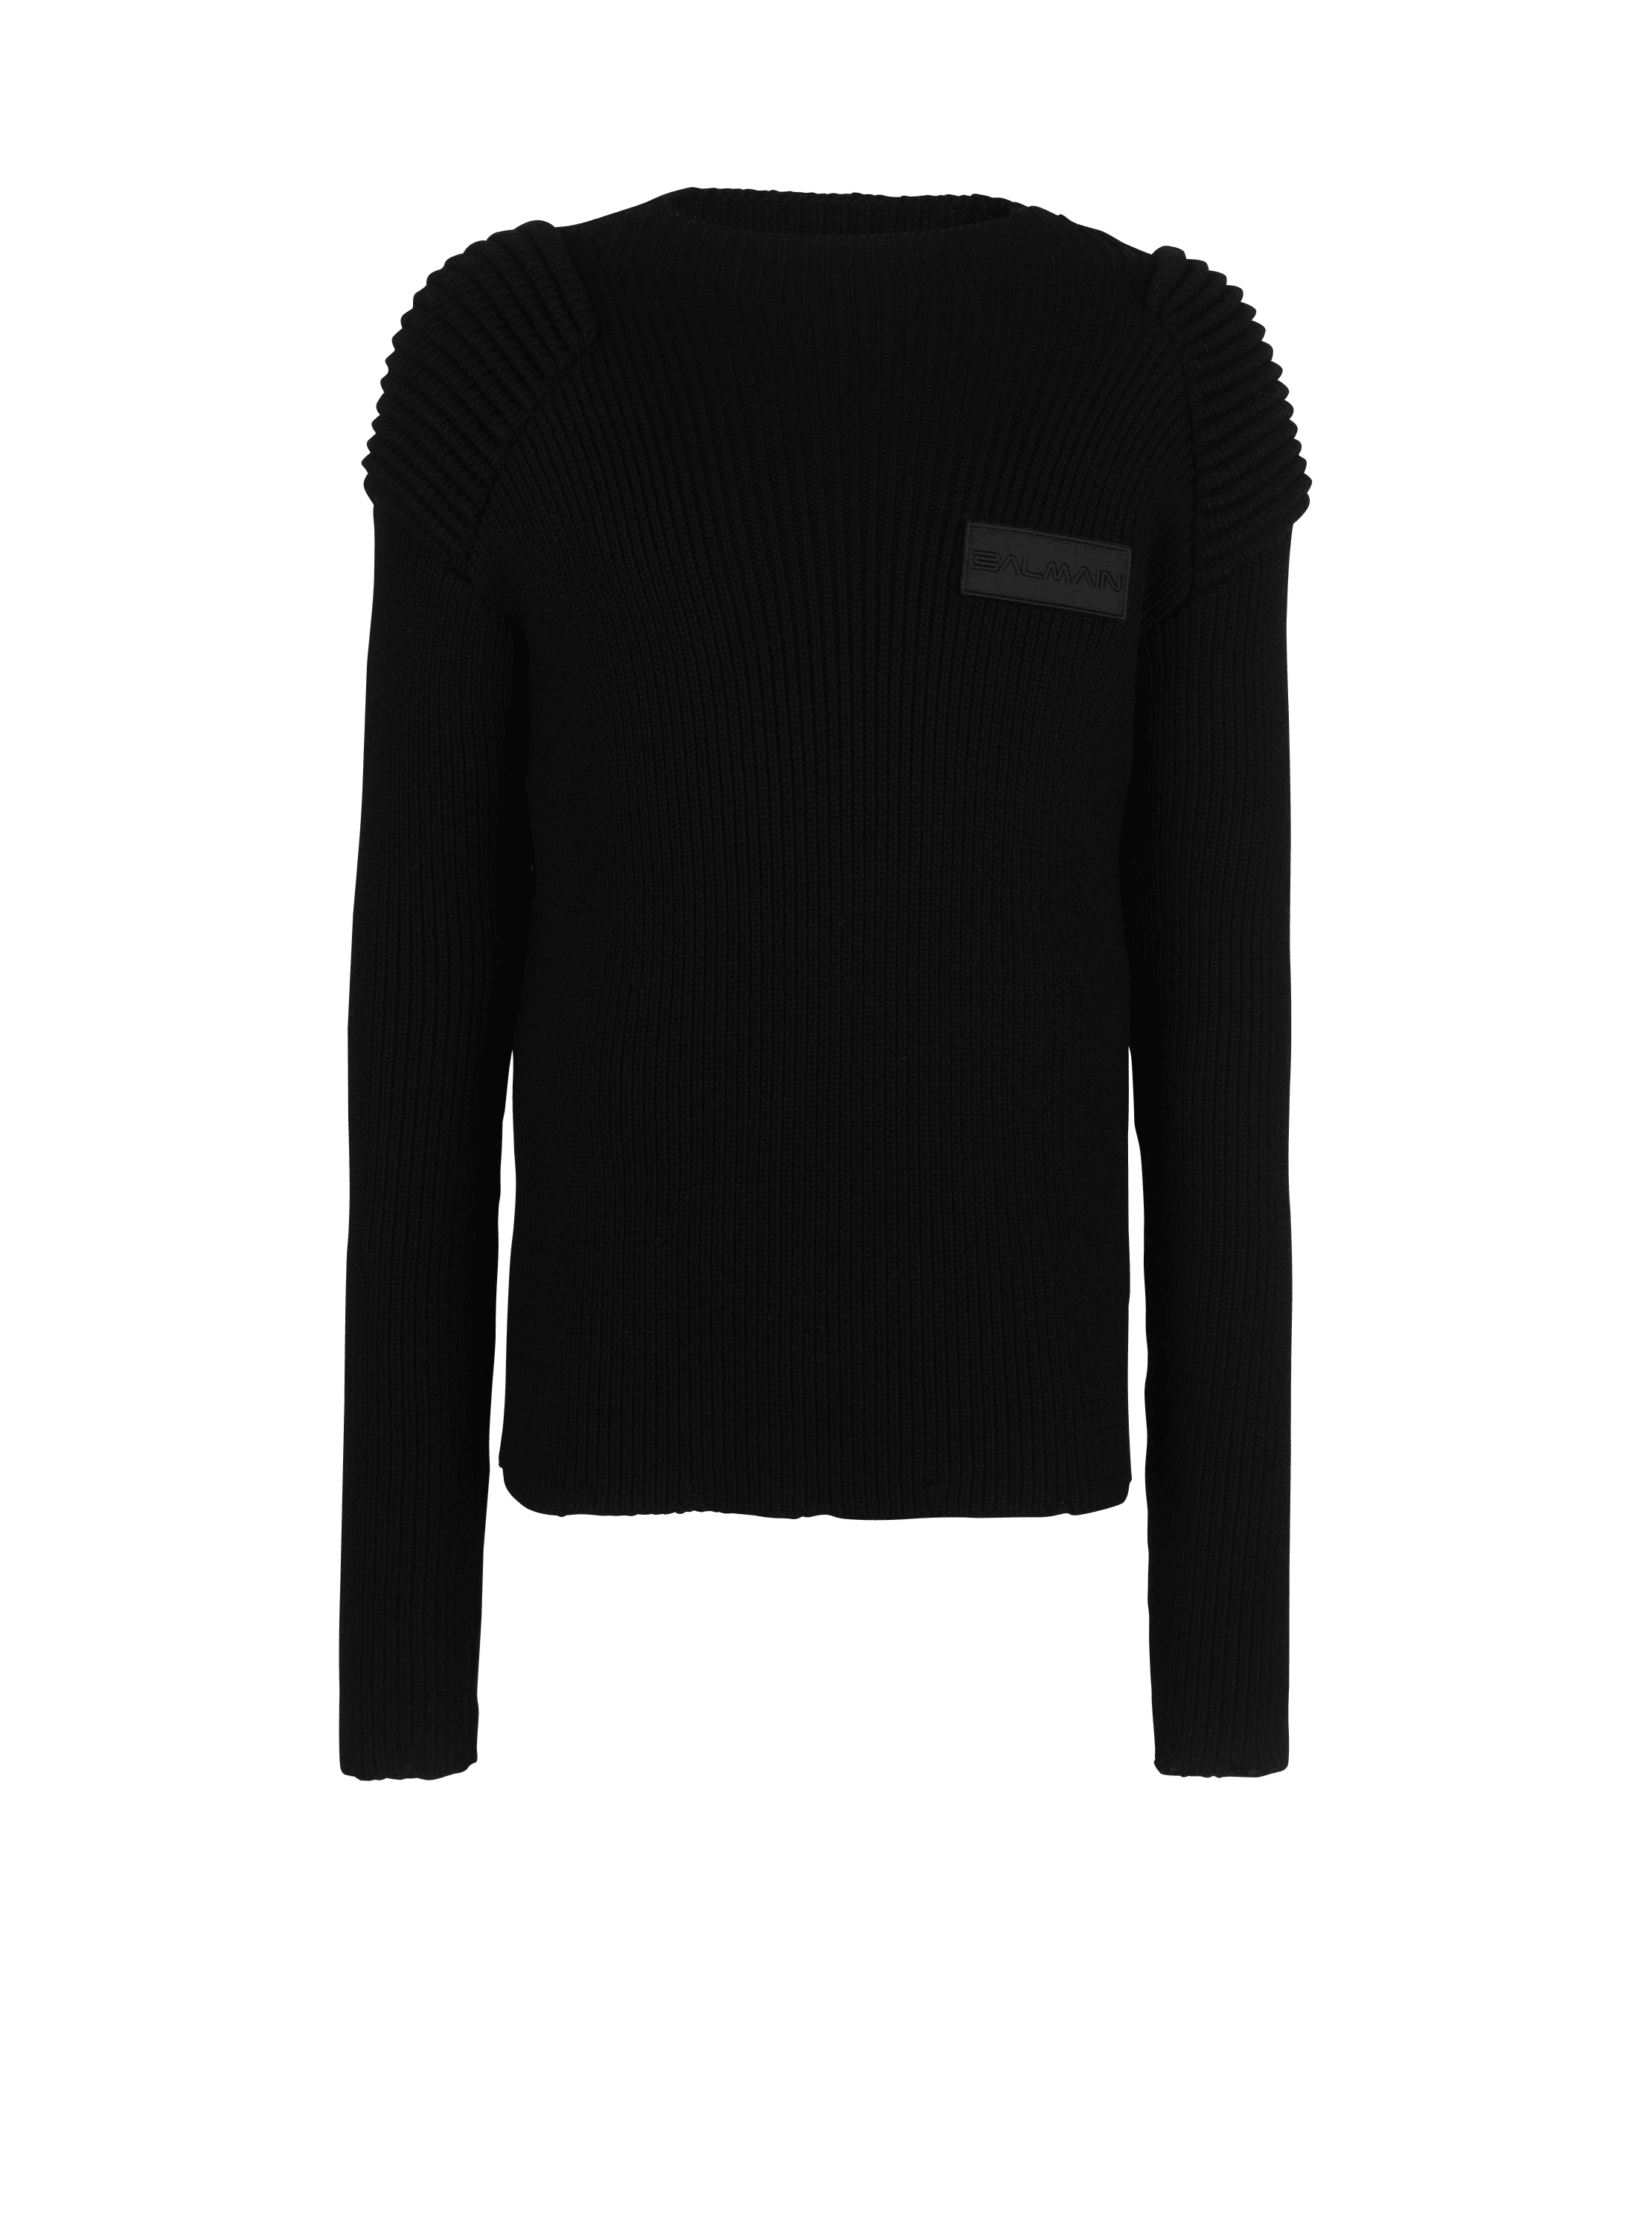 Wool jumper with Balmain logo, black, hi-res